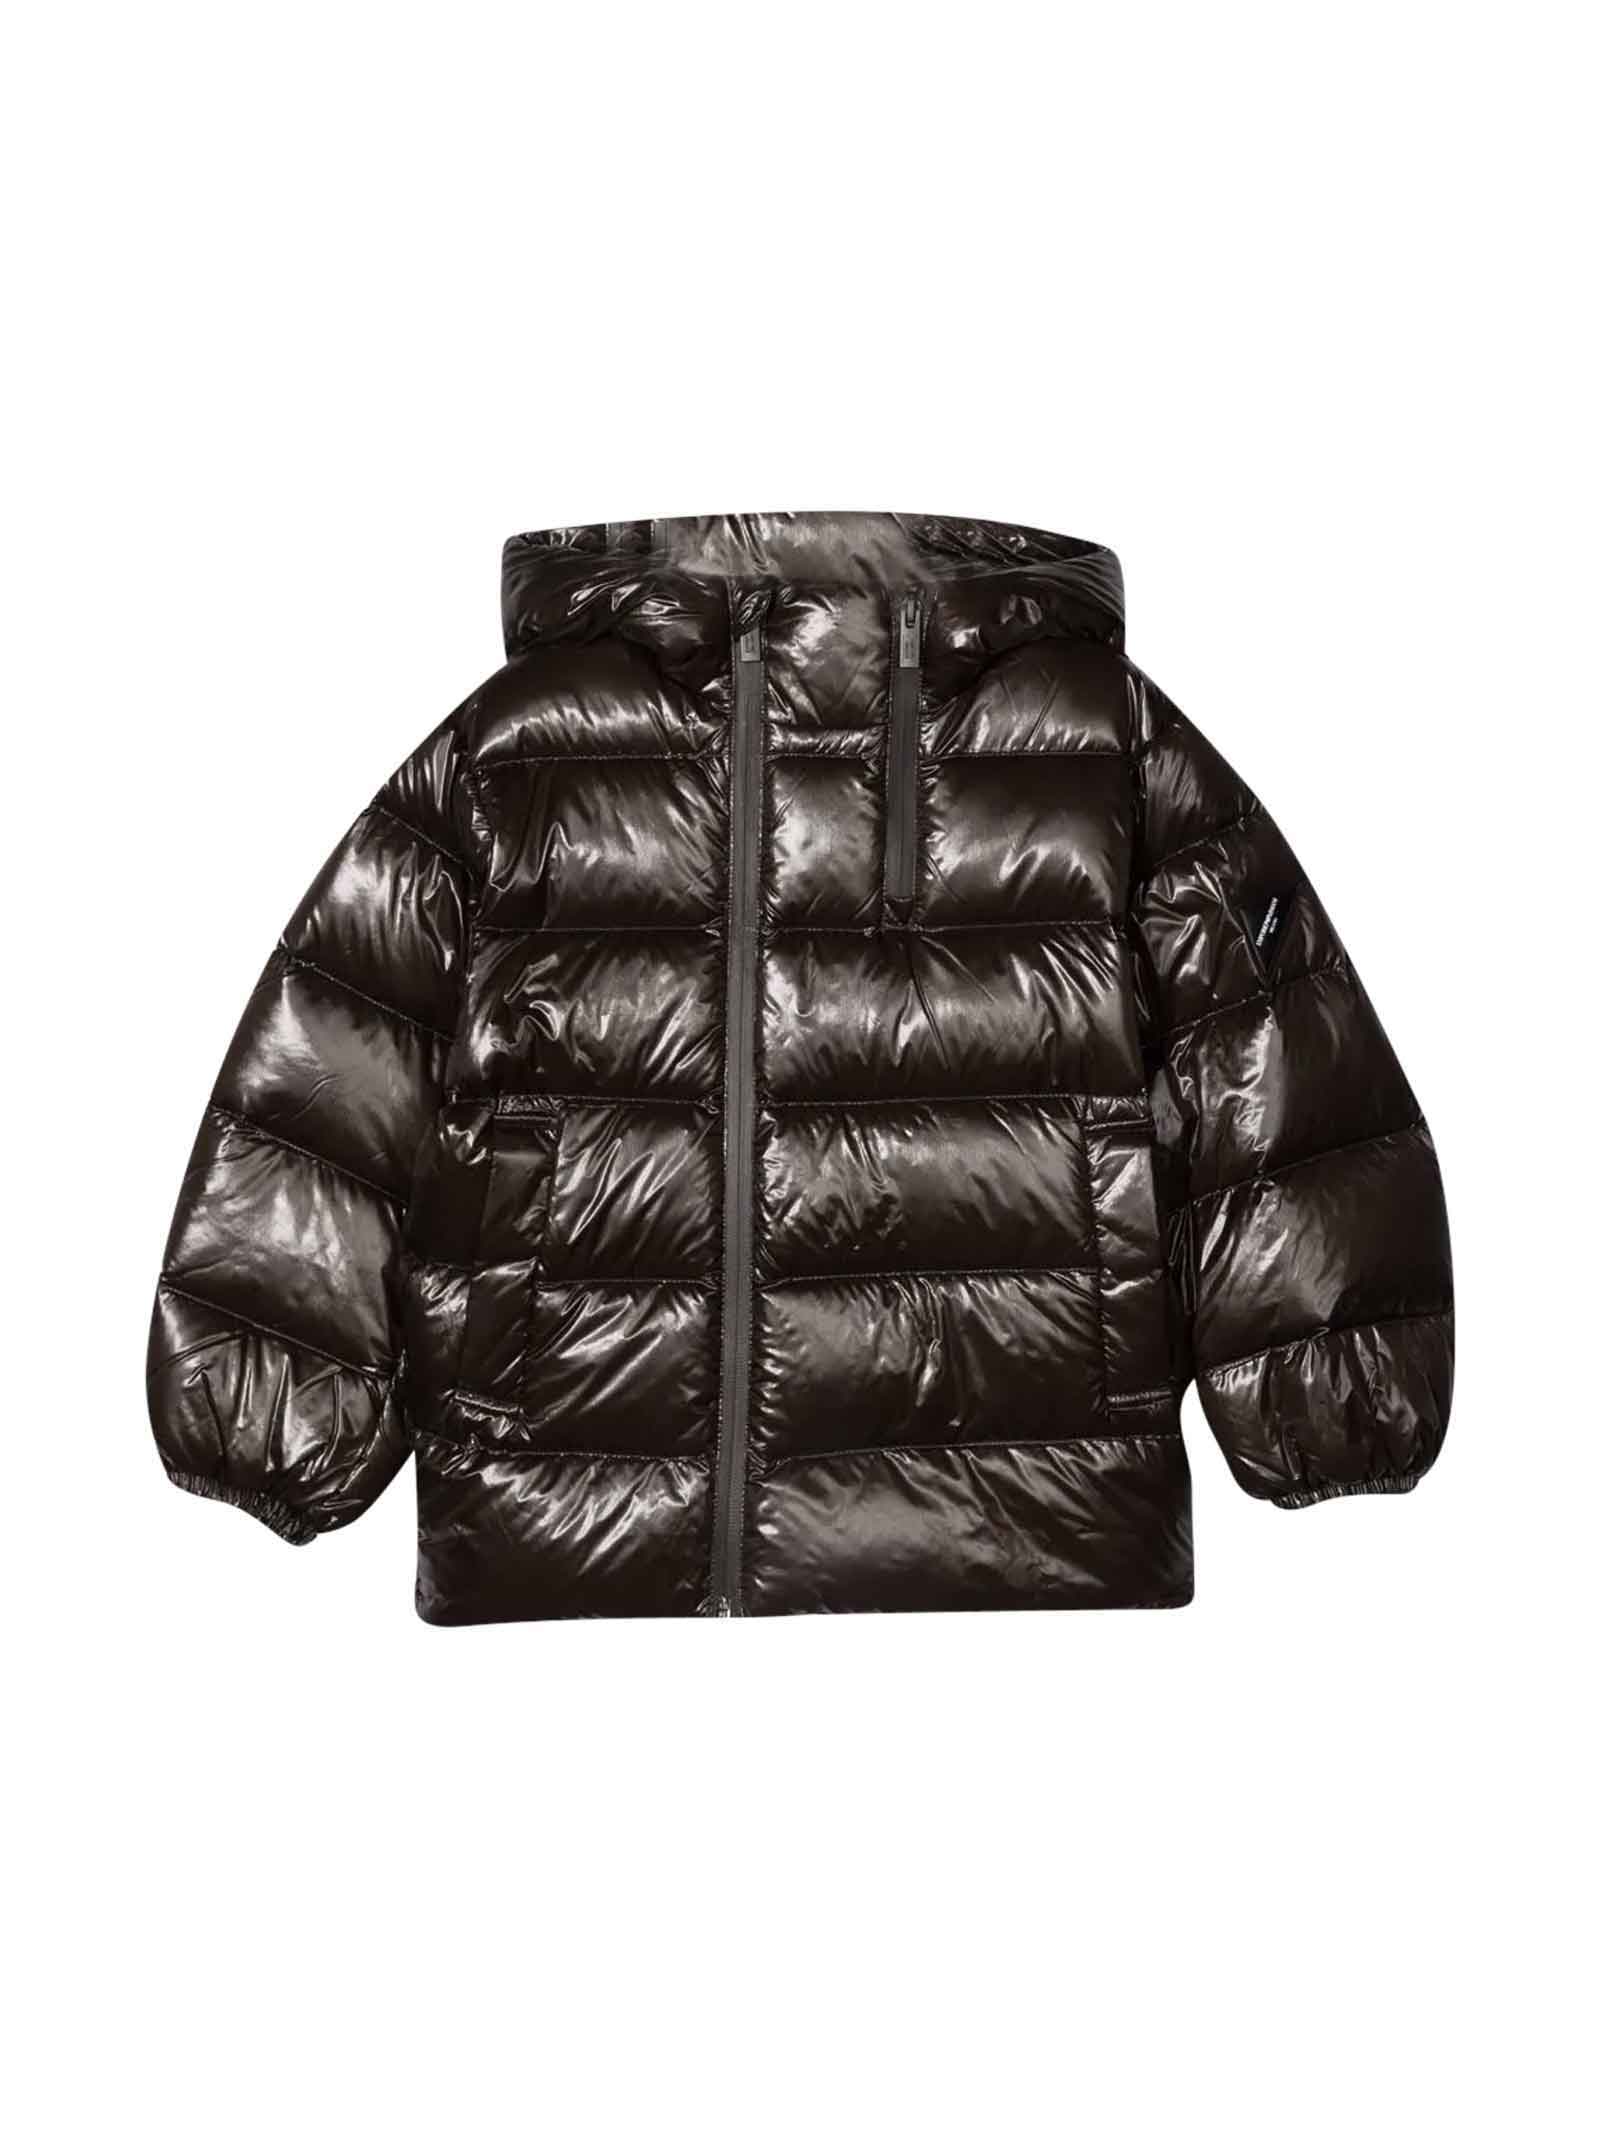 Emporio Armani Black Coat With Long Sleeve, Hood And Zip